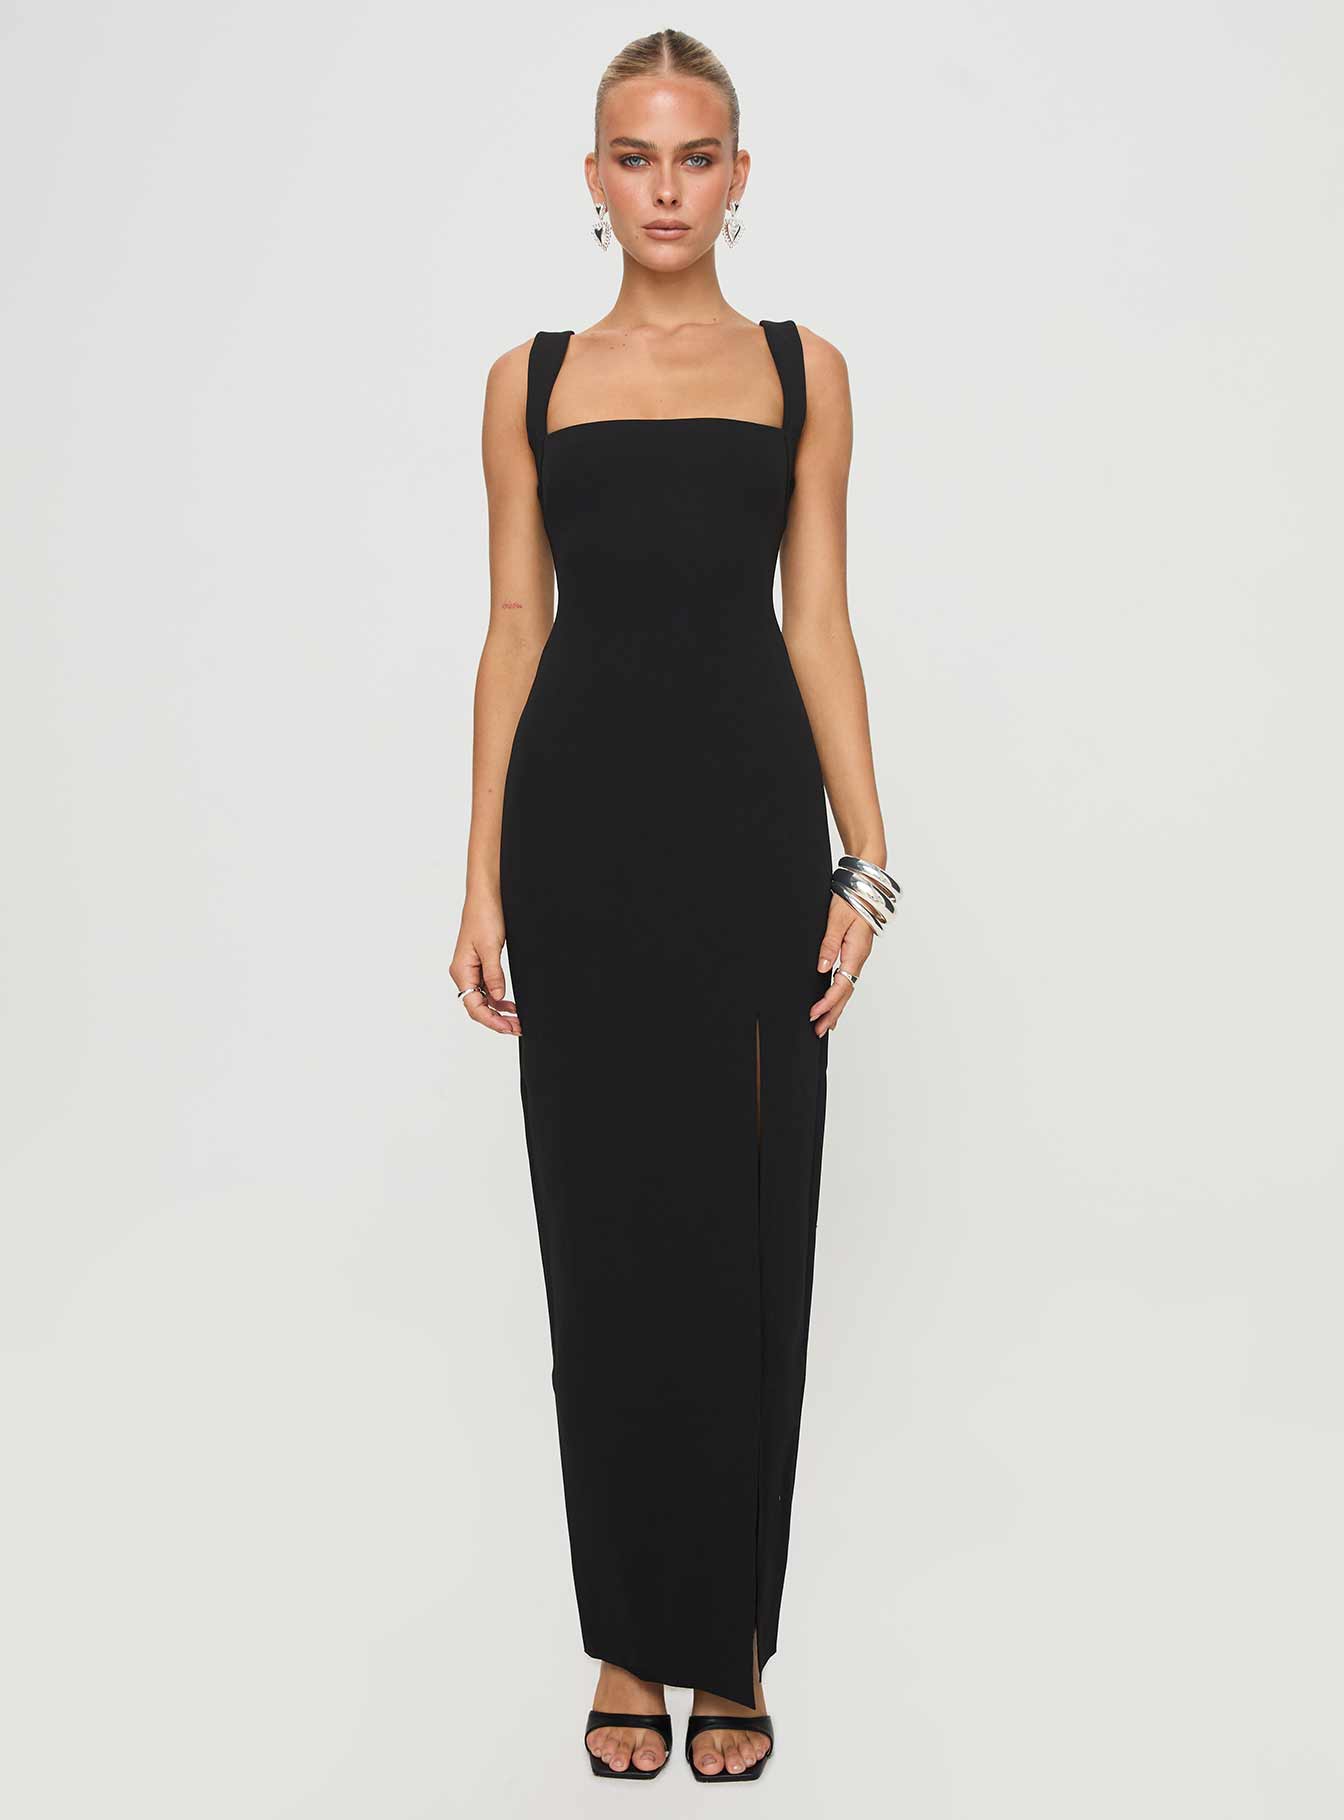 Shop Formal Dress - Bombshell Maxi Dress Black featured image